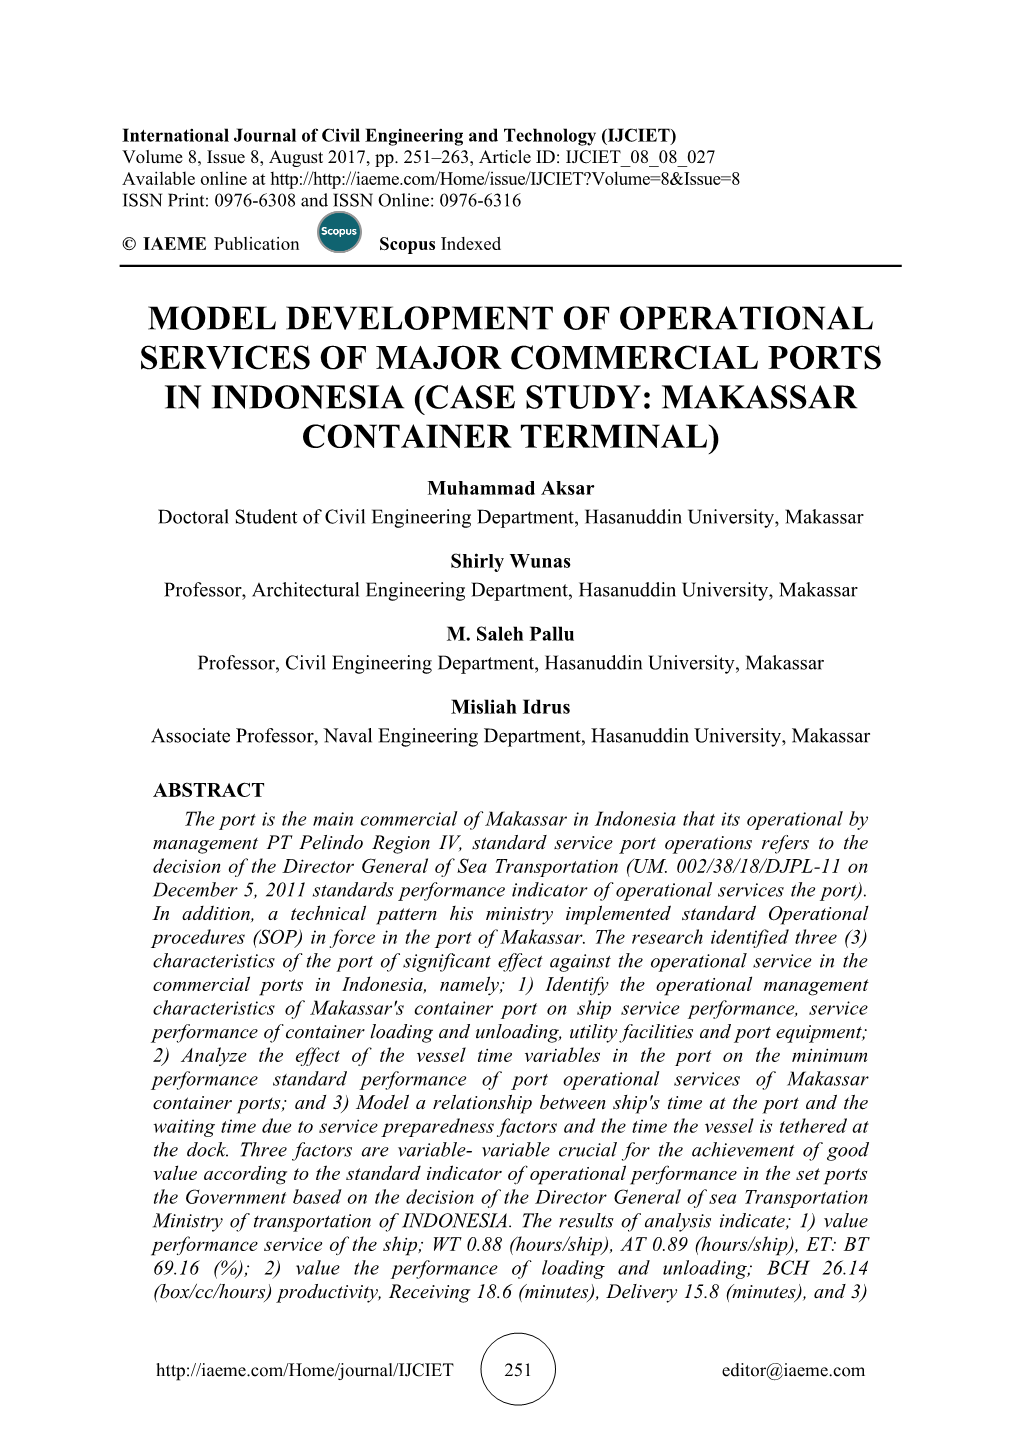 Case Study: Makassar Container Terminal)